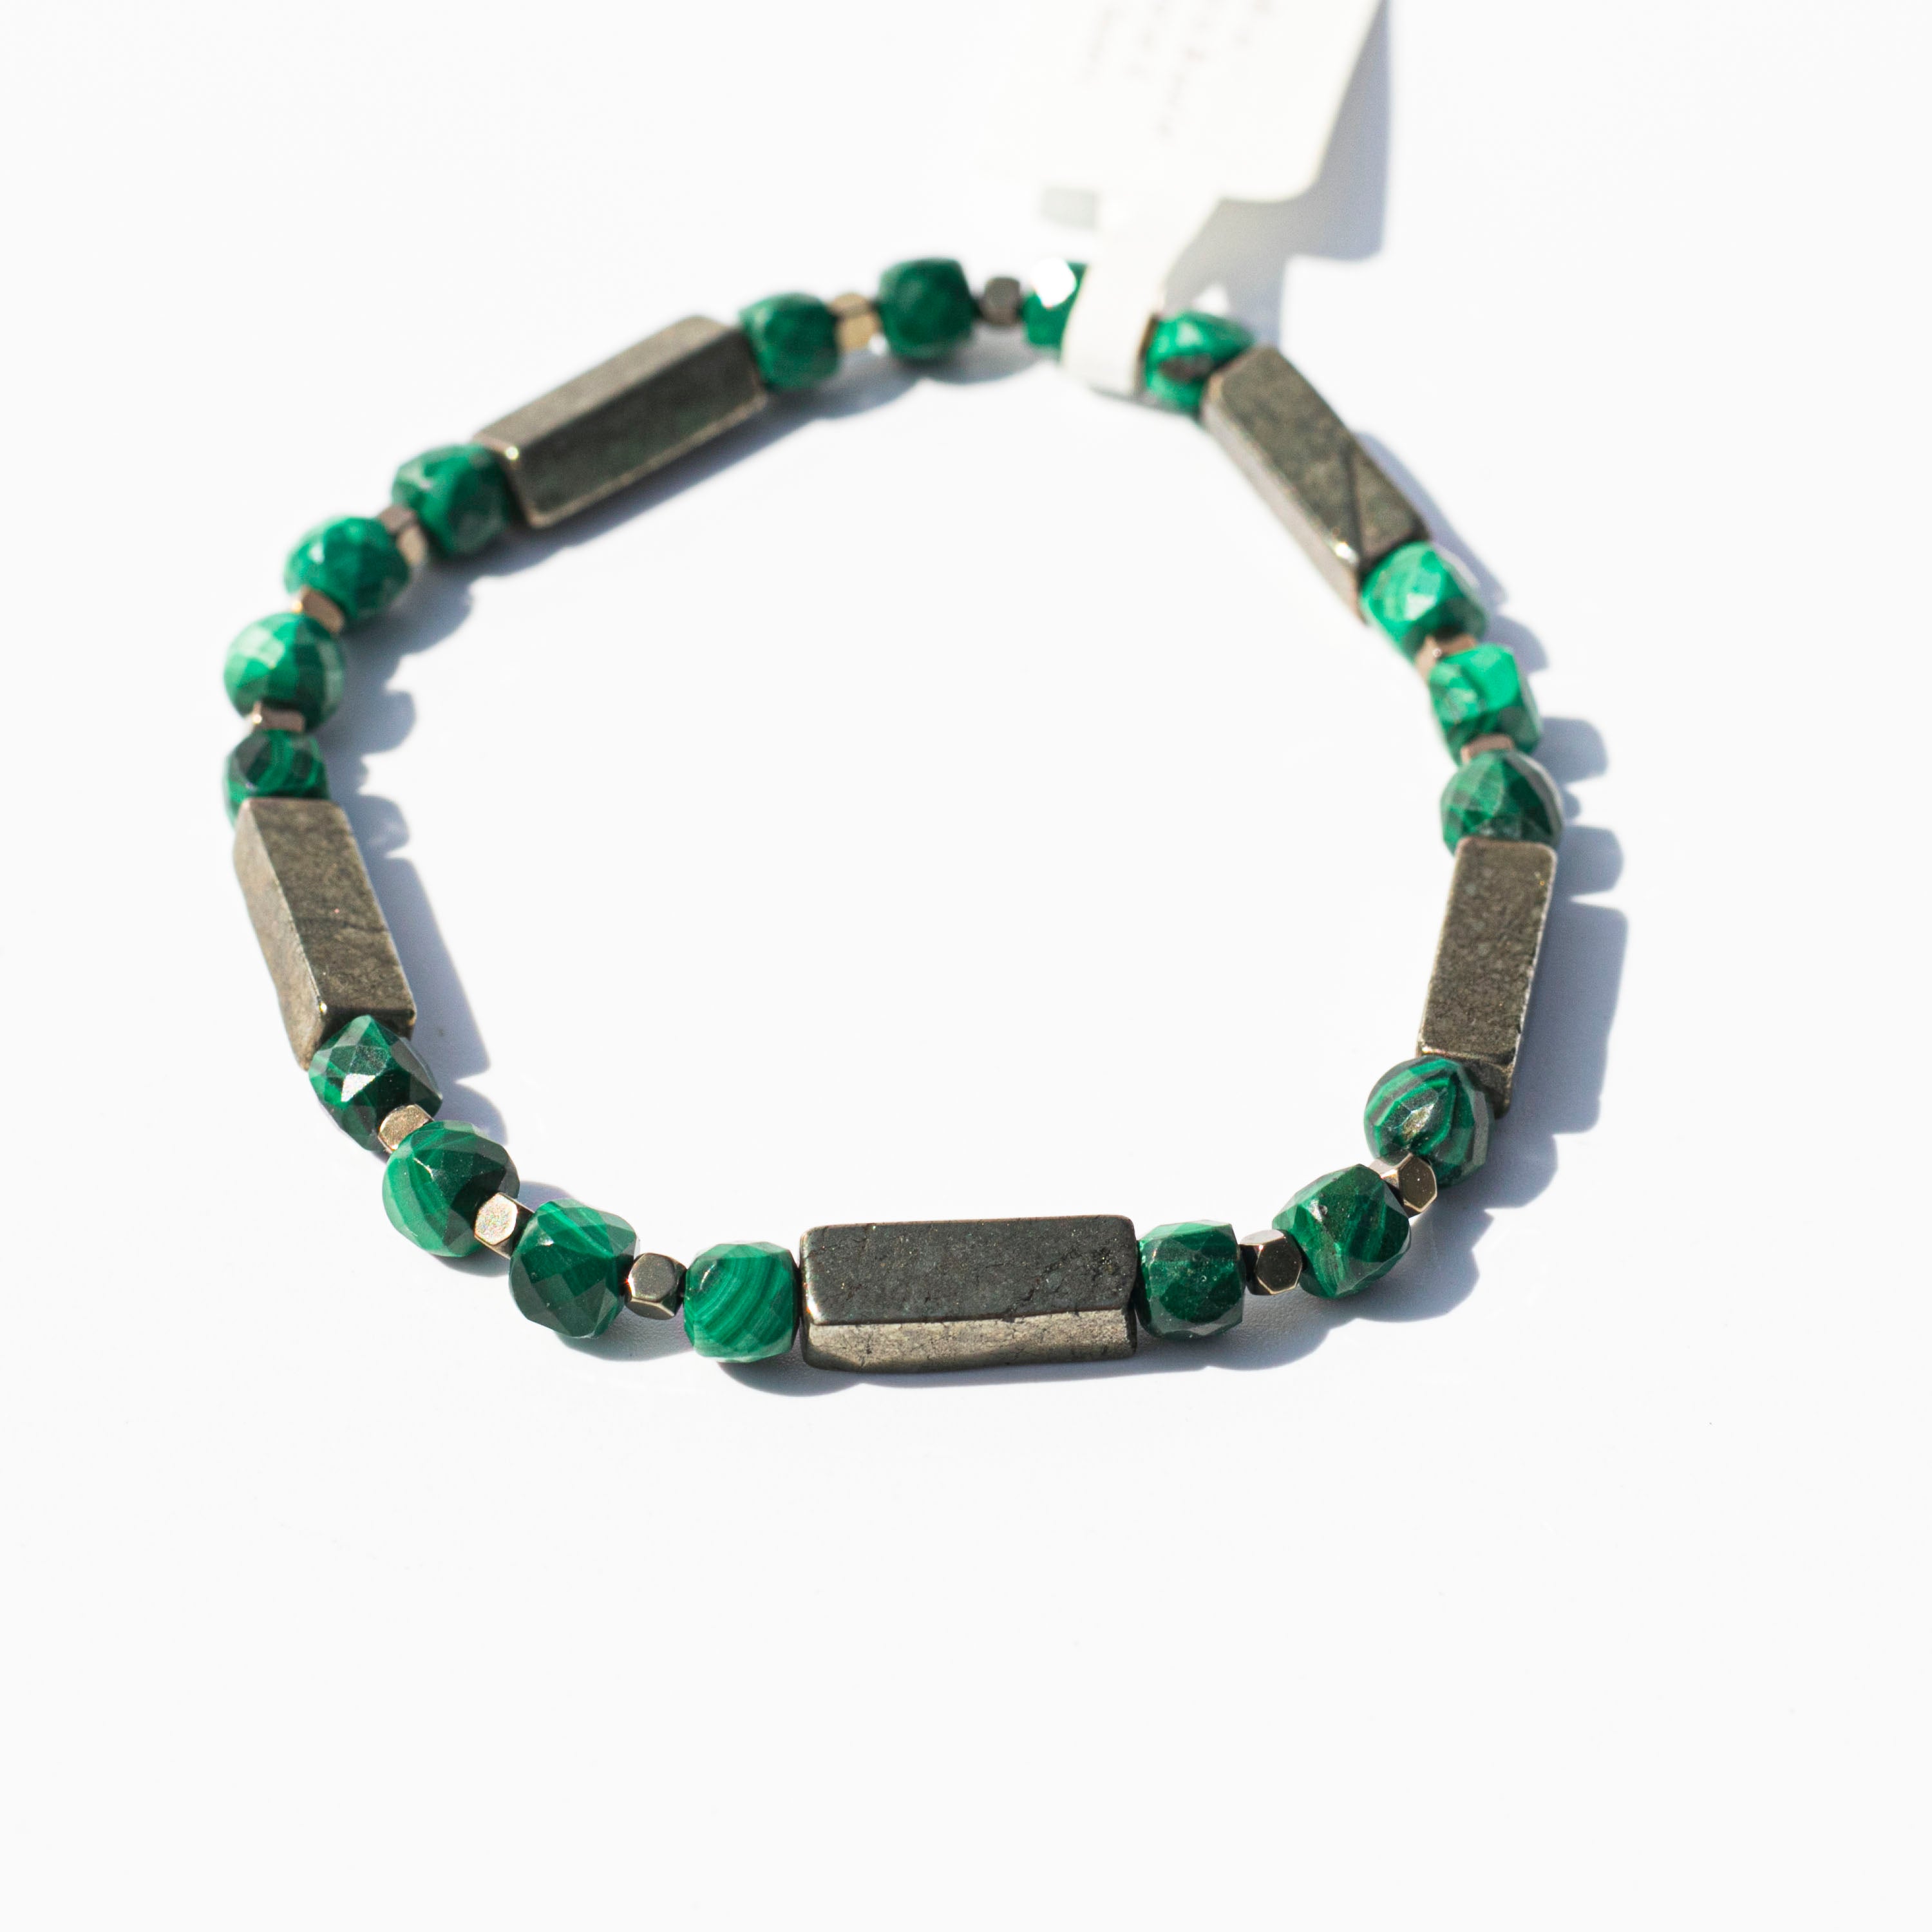 Malachite (孔雀石)| Stretchy Cord Bracelet | Copper Cube & Titanium Pyrite Spacer Beads | The Traveller's Protection Stone